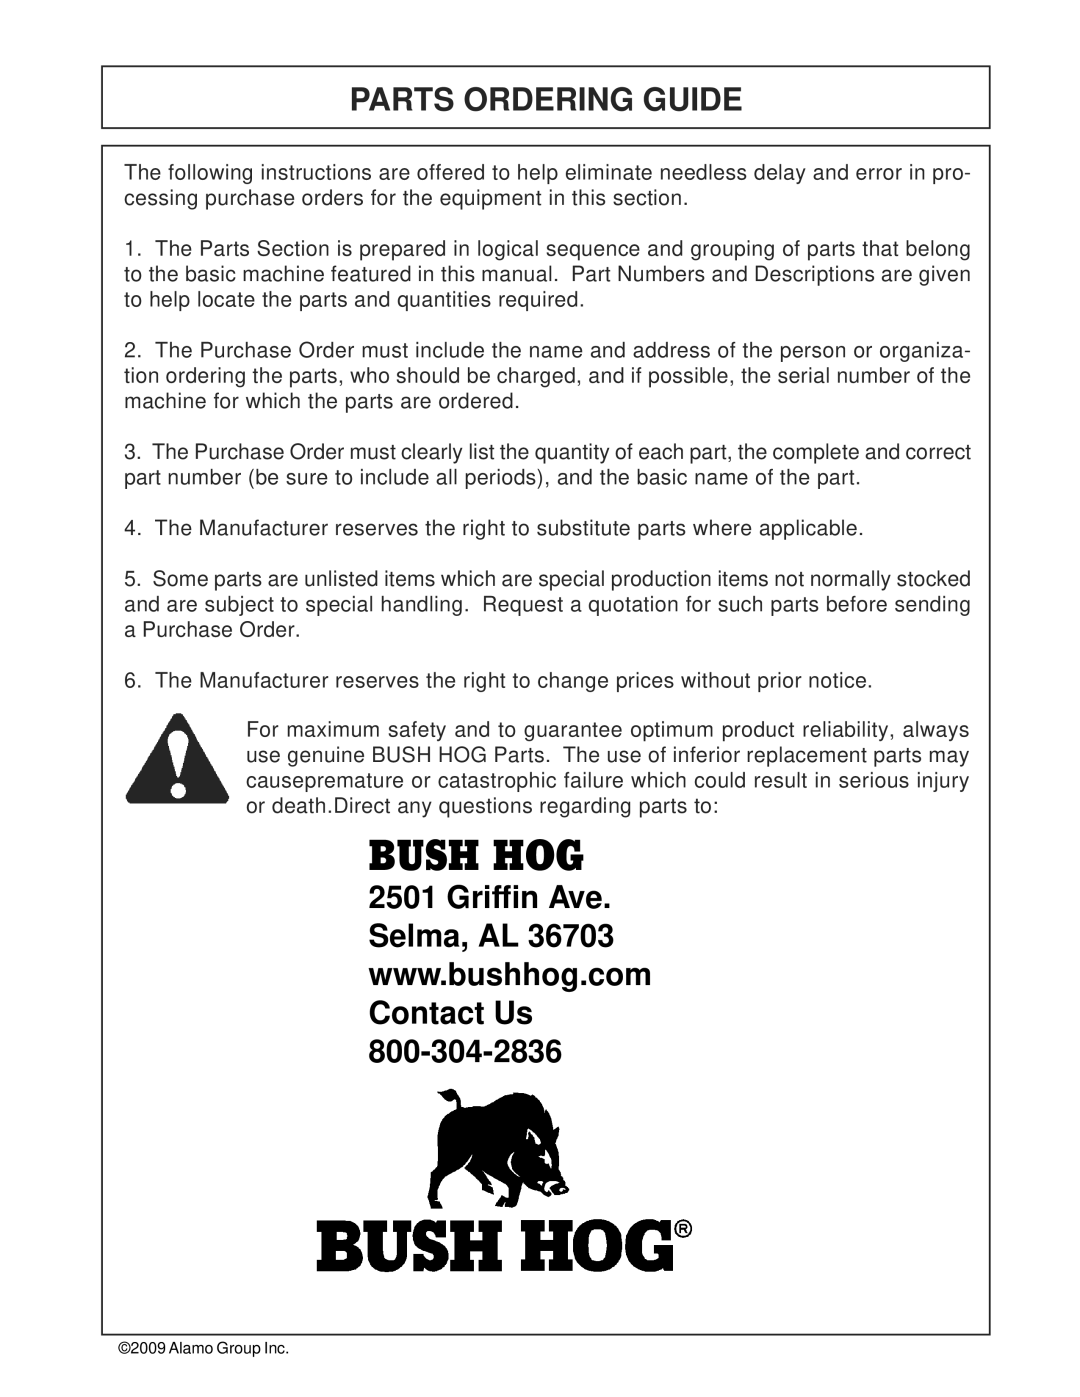 Bush Hog RMB1865E manual Bush Hog, Parts Ordering Guide 